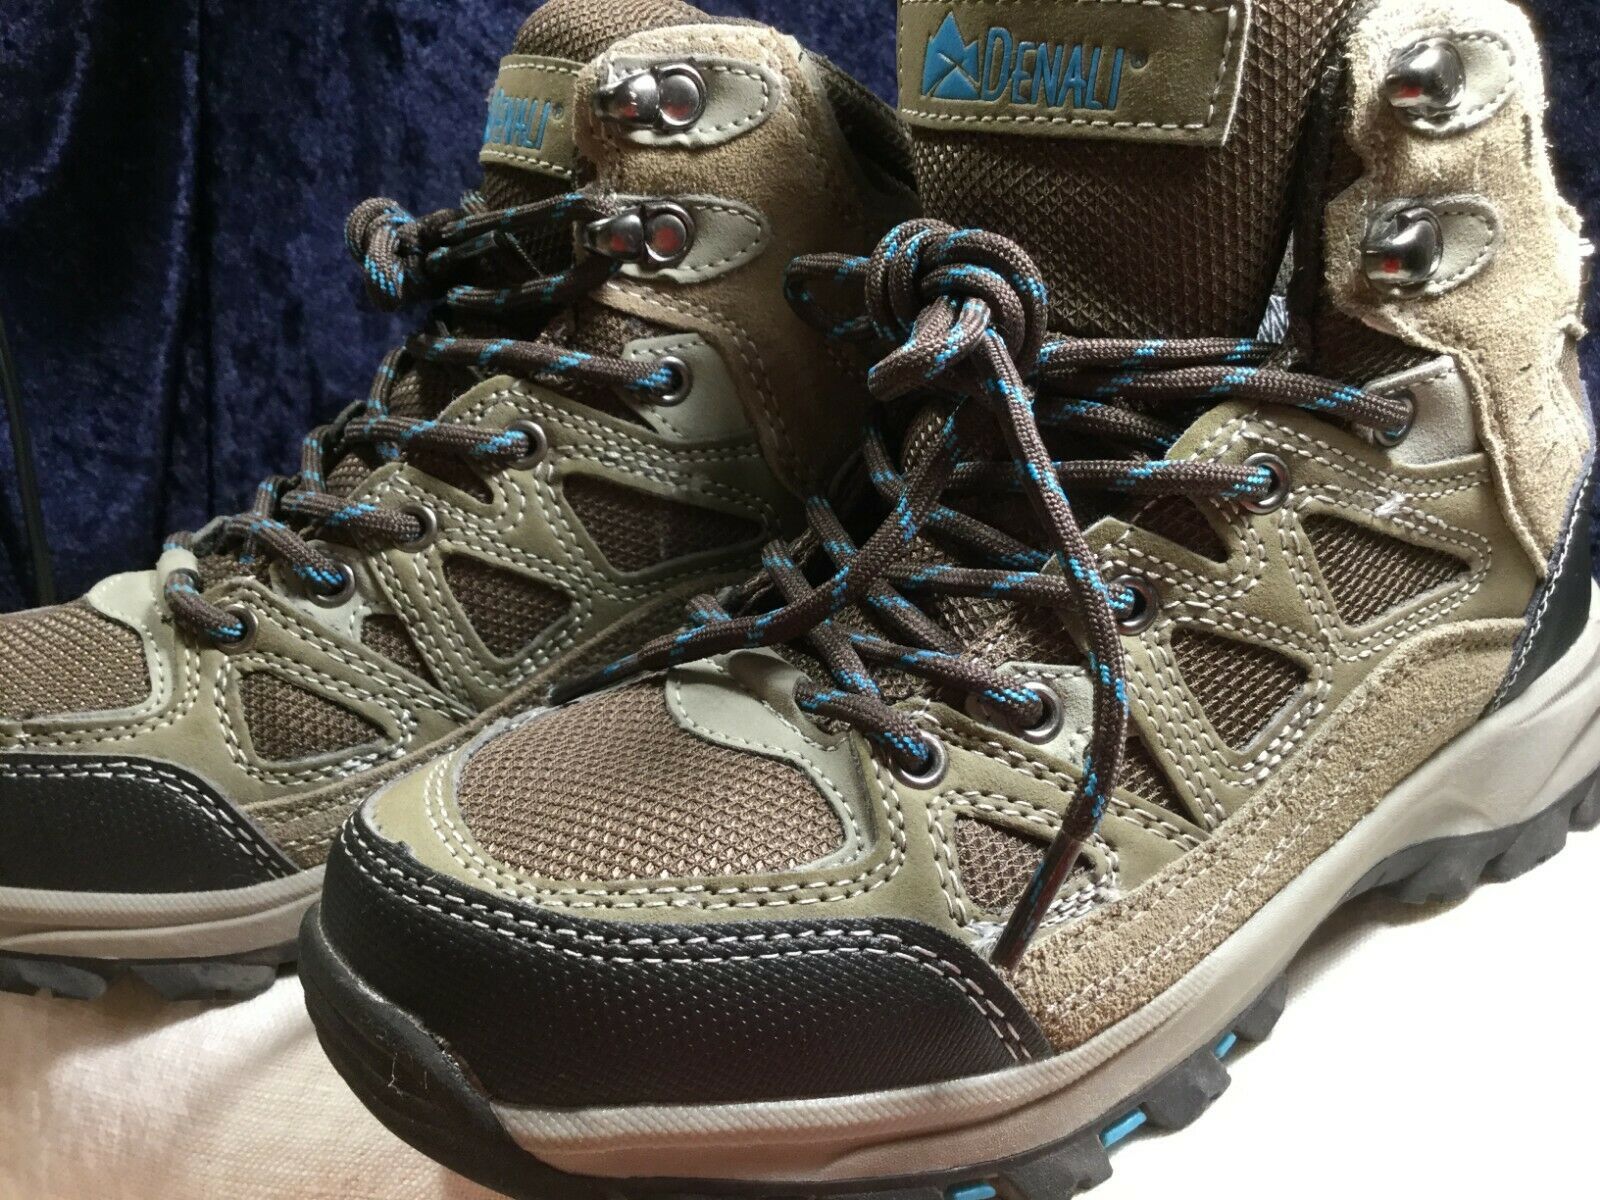 denali toklat ii wp women's hiking boots